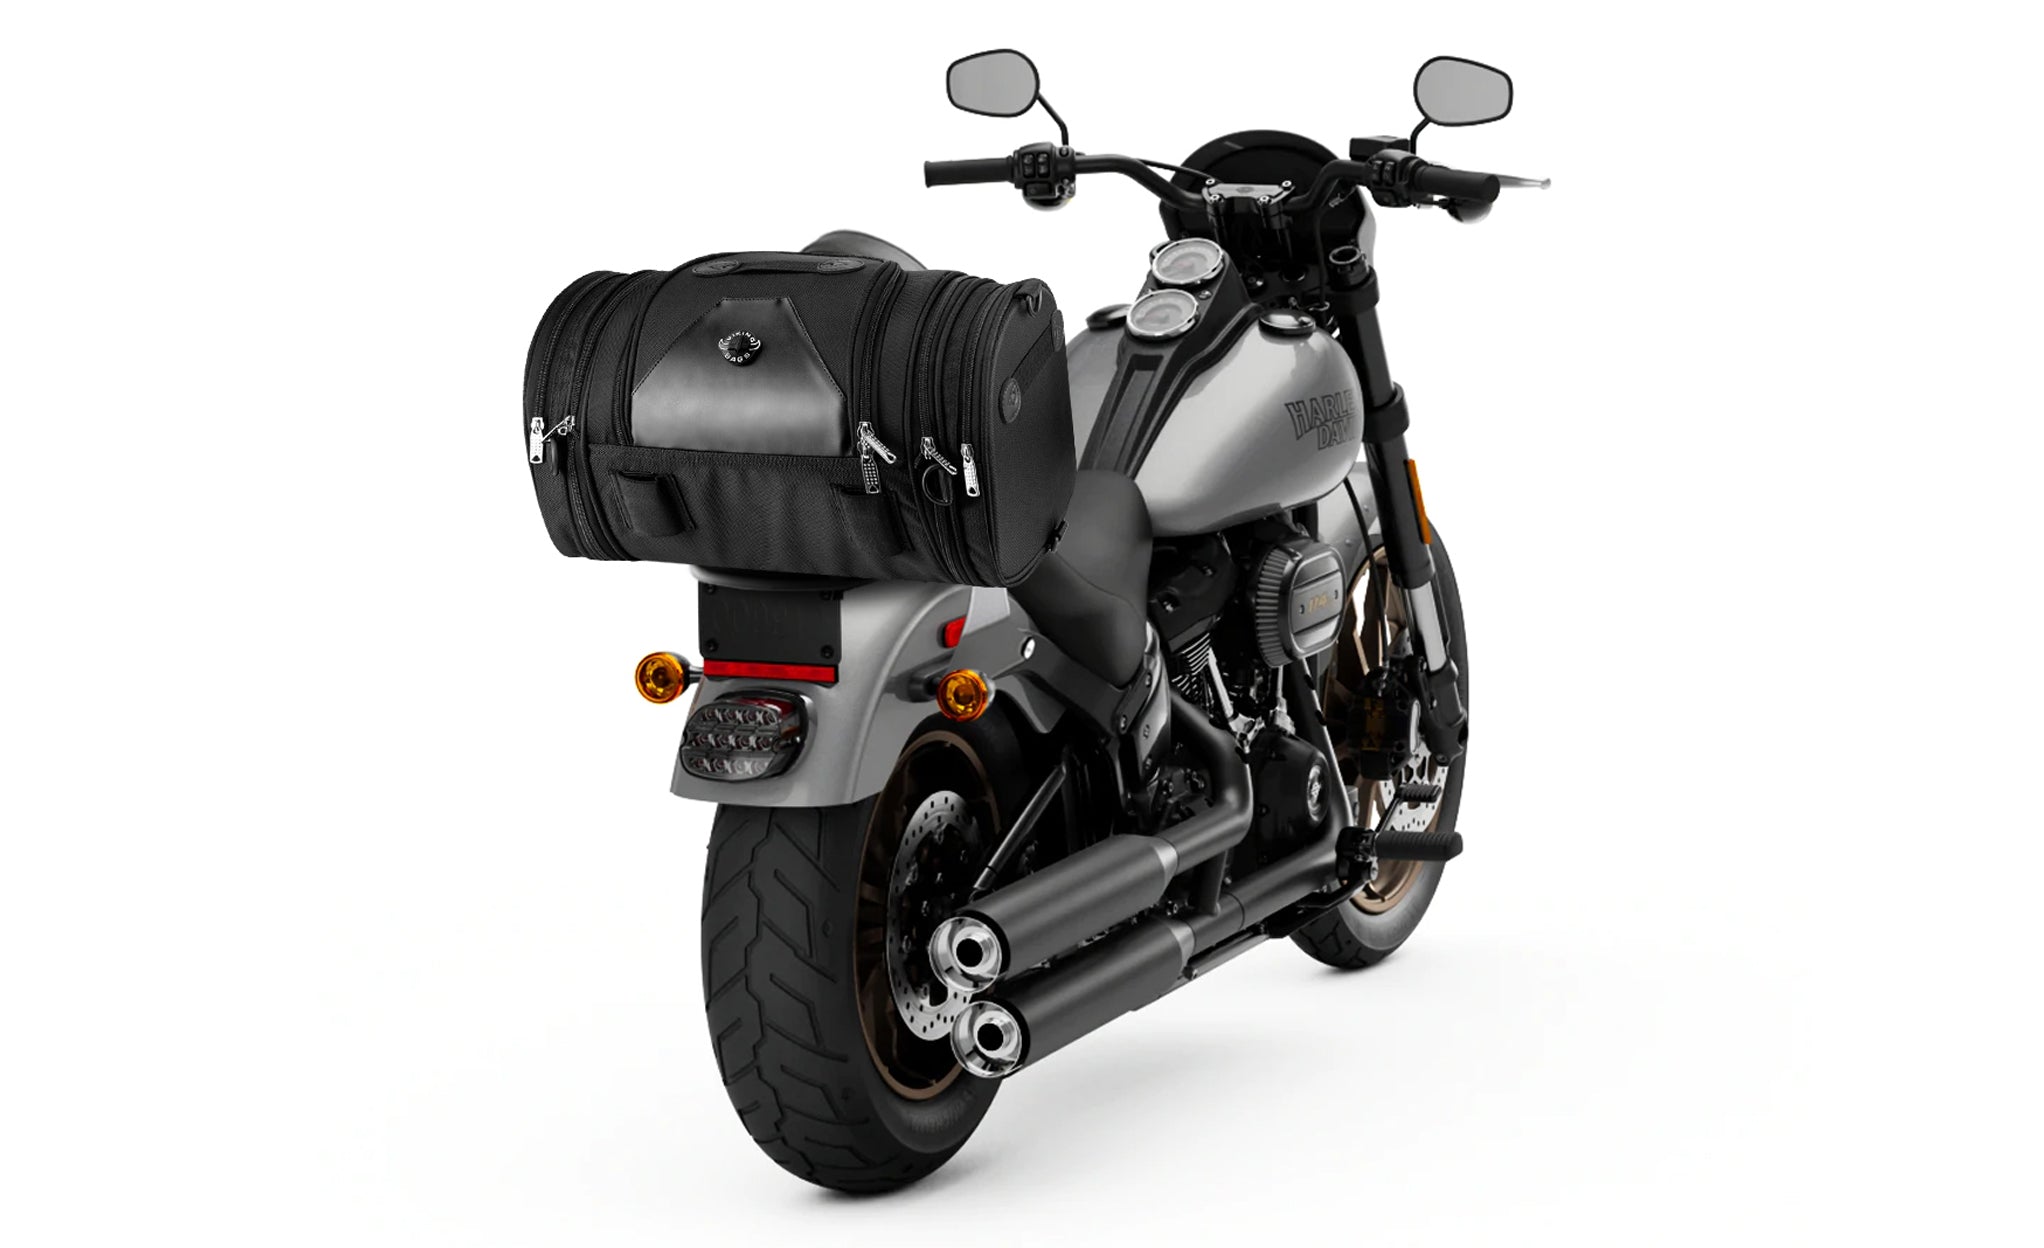 Viking Axwell Small Yamaha Motorcycle Sissy Bar Bag Bag on Bike View @expand